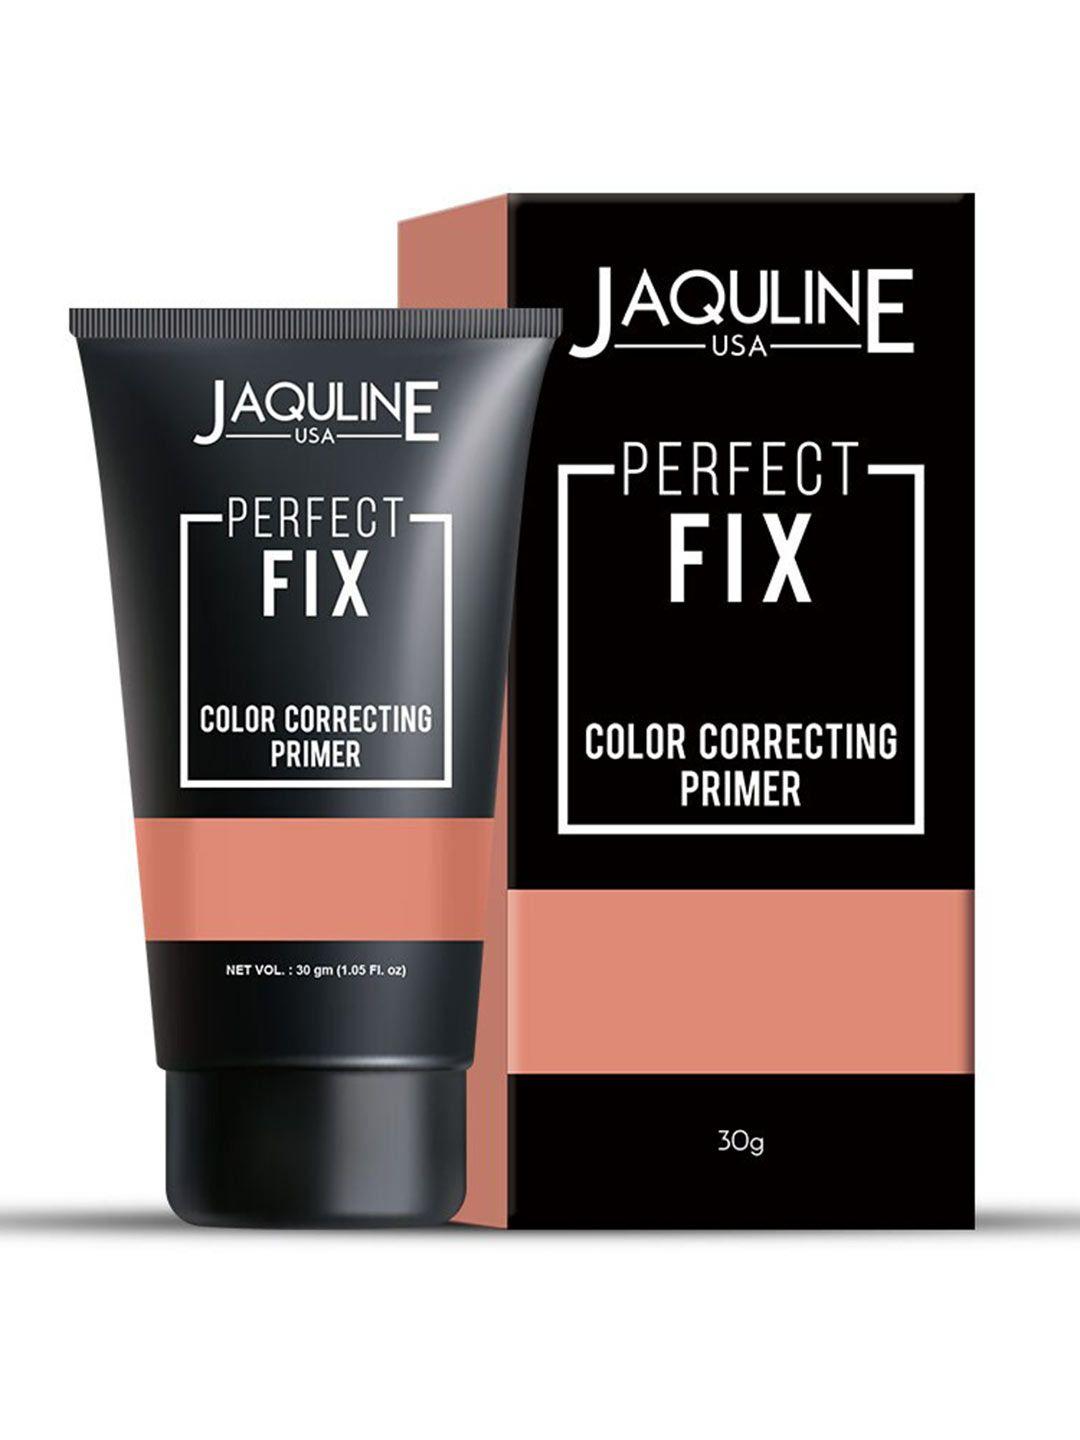 jaquline usa perfect fix color correcting primer -30gm - orange